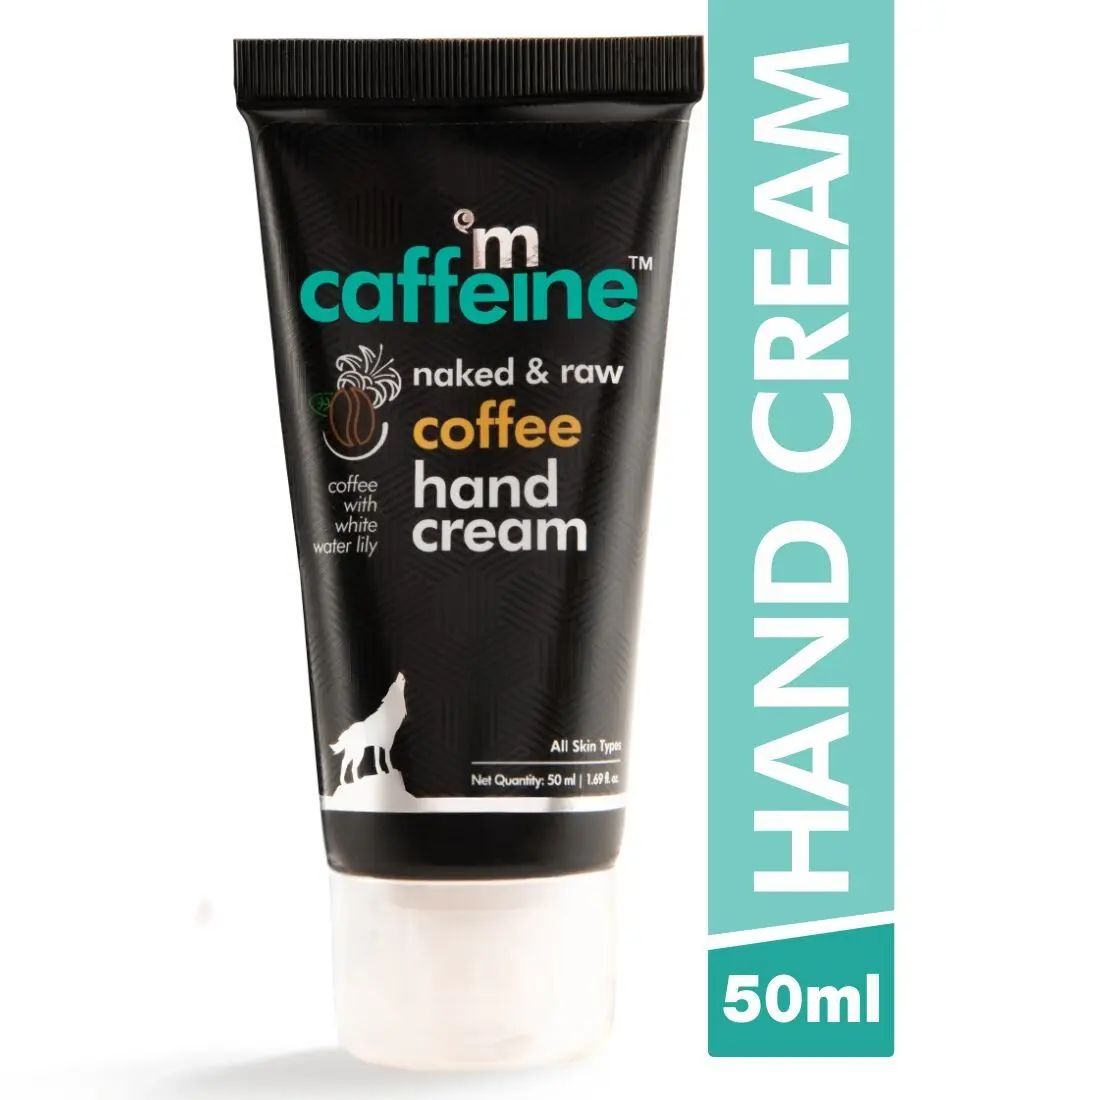 mCaffeine FREE mCaffeine Naked & Raw Coffee Hand Cream worth Rs 325